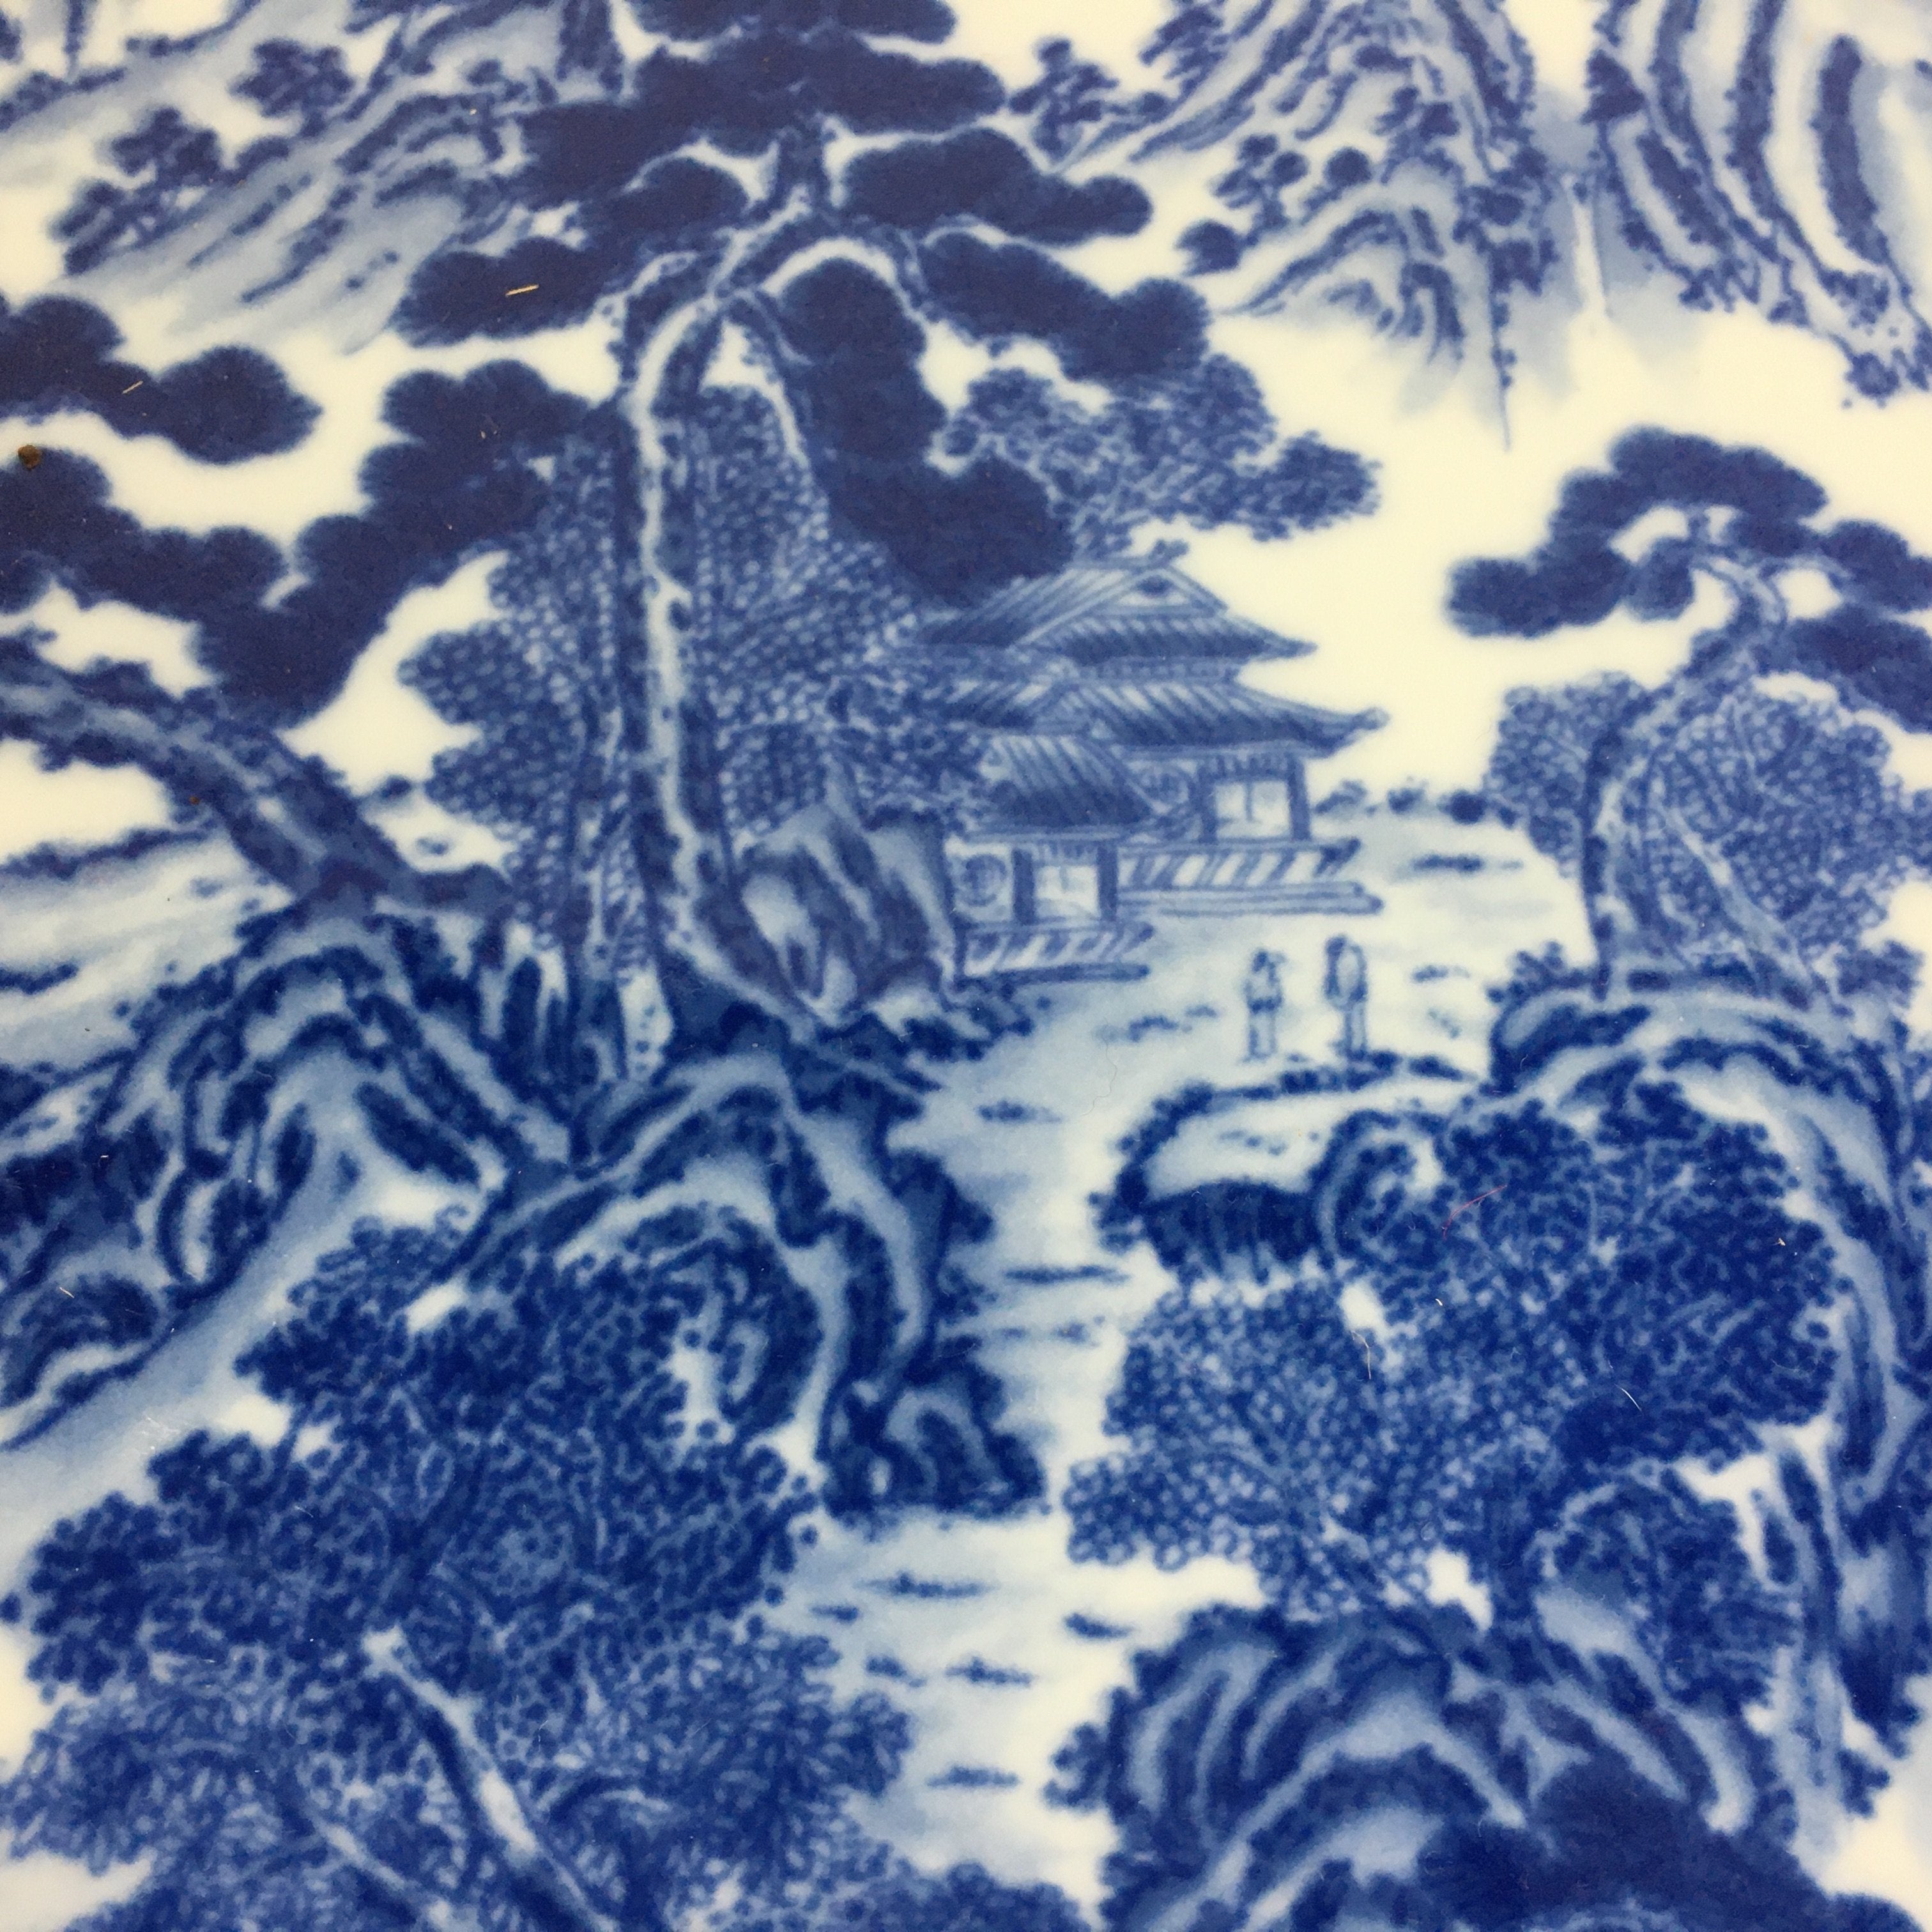 Japanese Porcelain Arita Ware Large Plate Centerpiec Vtg Round Blue 40.5cm PP649